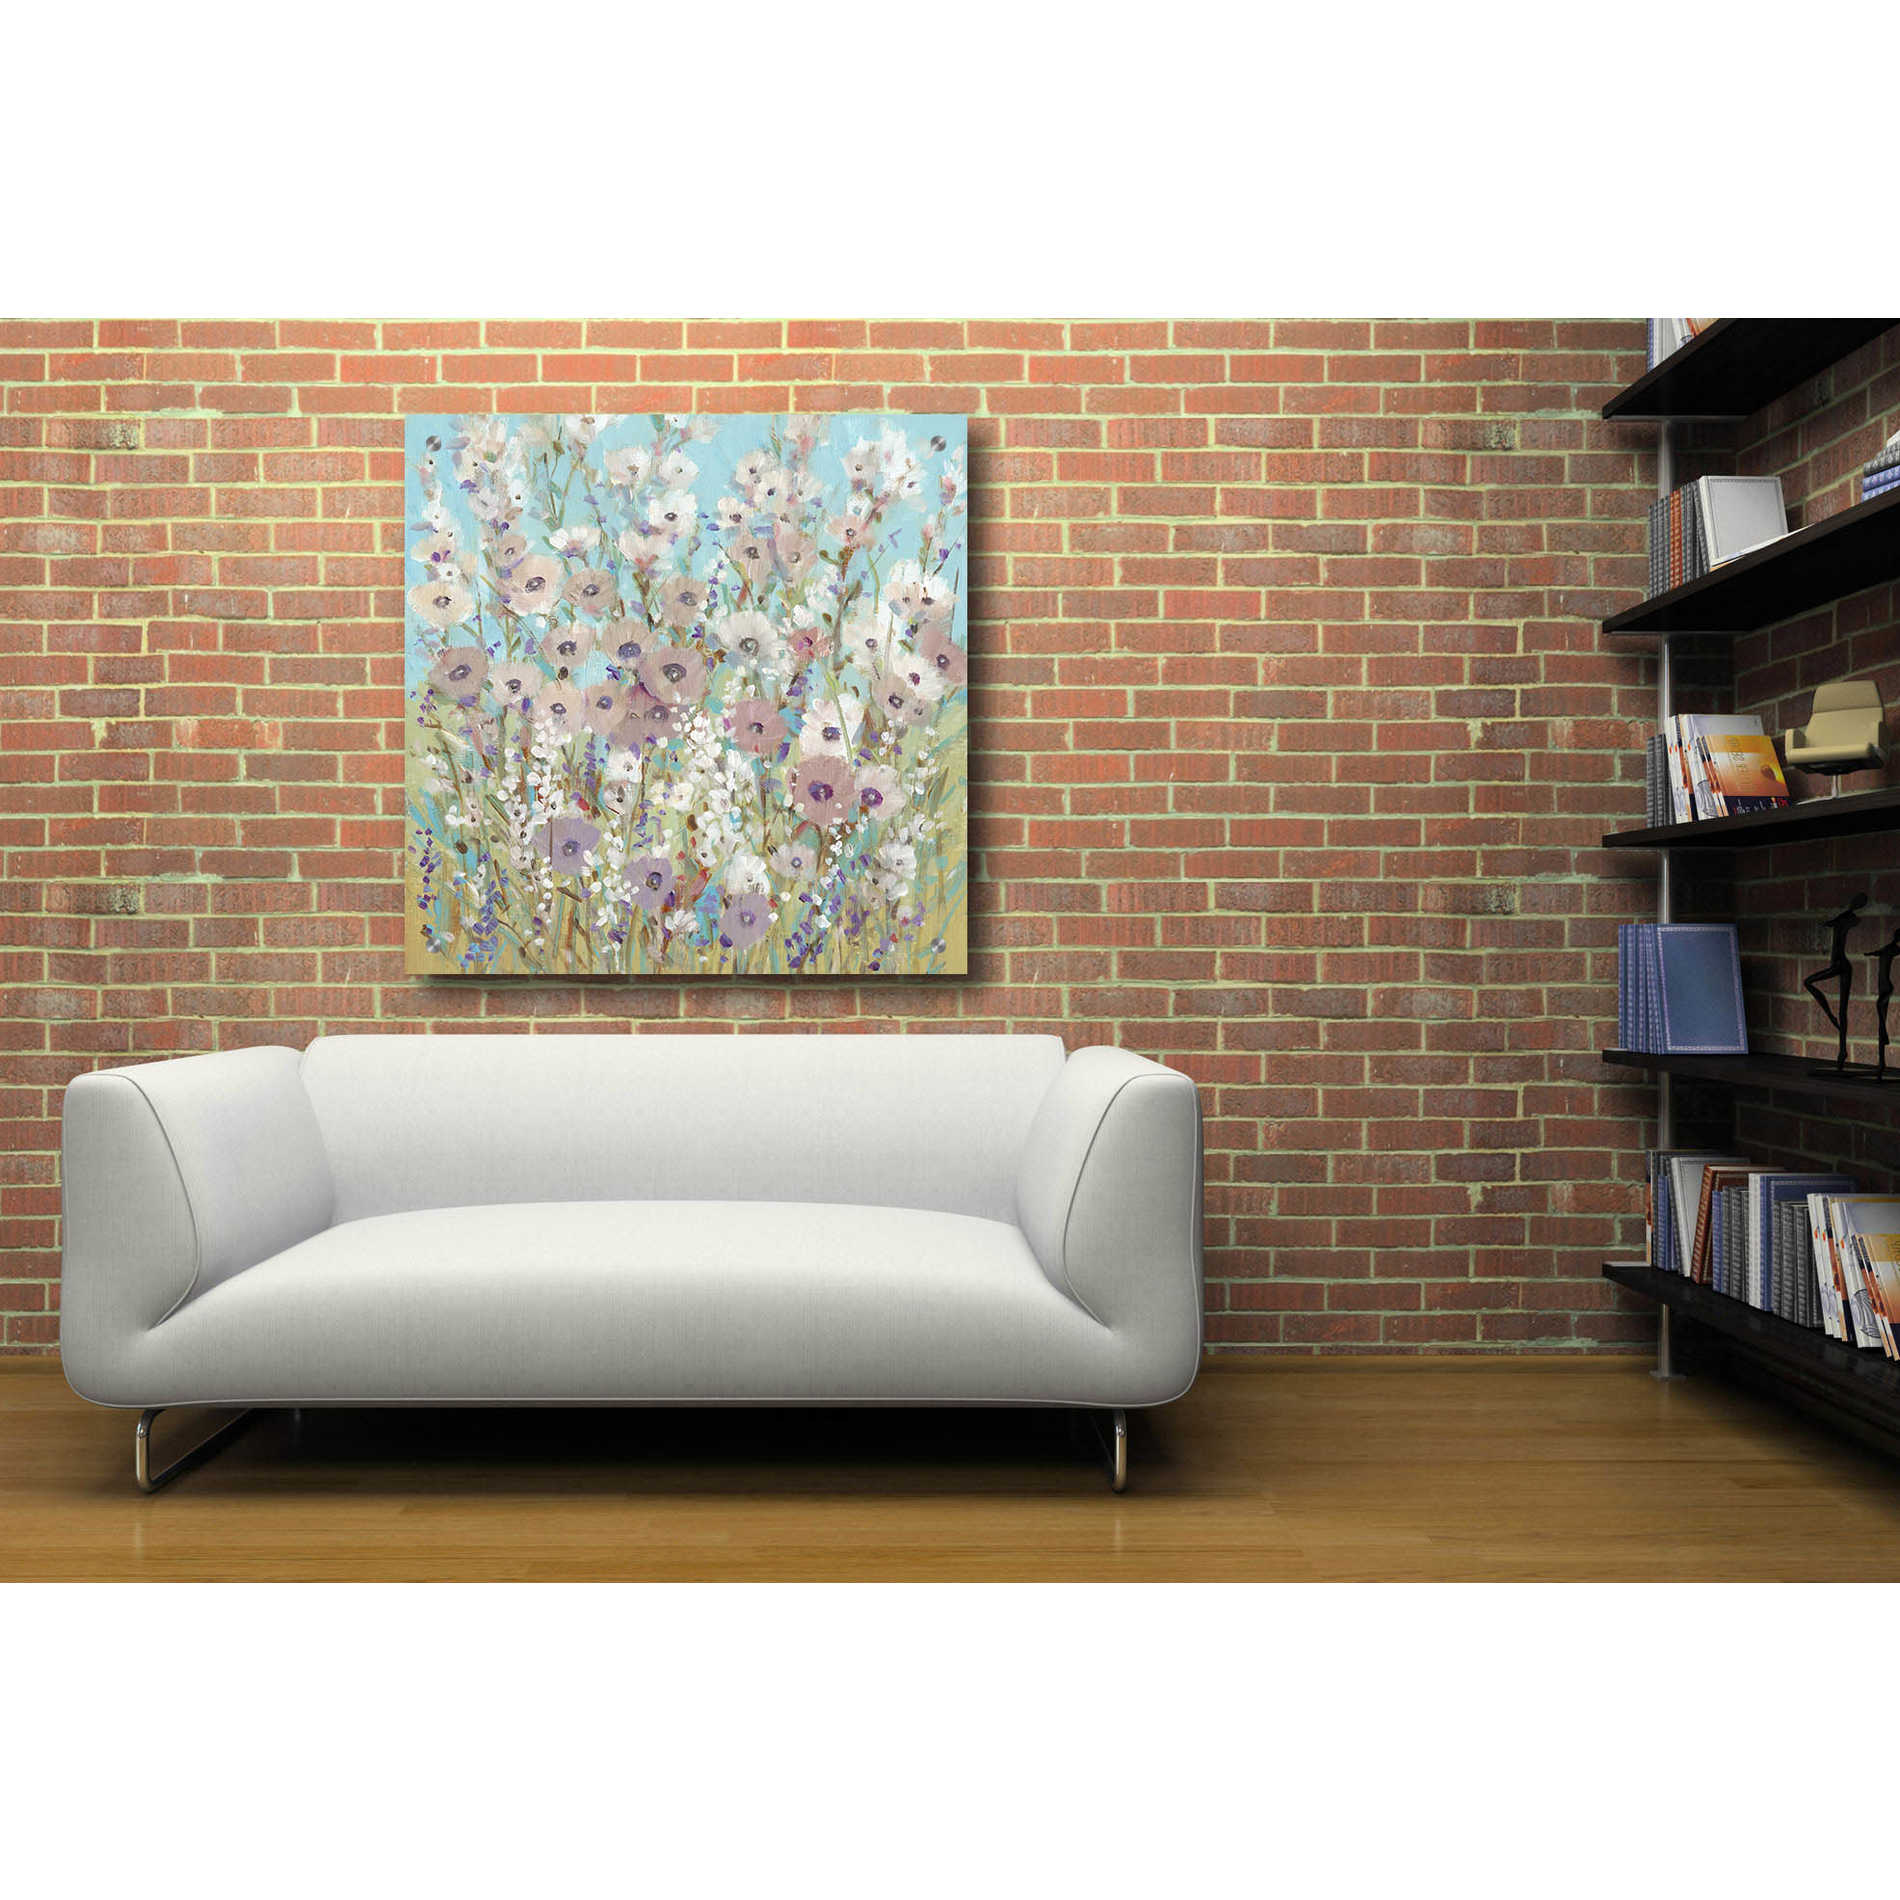 Epic Art 'Mixed Flowers II' by Tim O'Toole, Acrylic Glass Wall Art,36x36